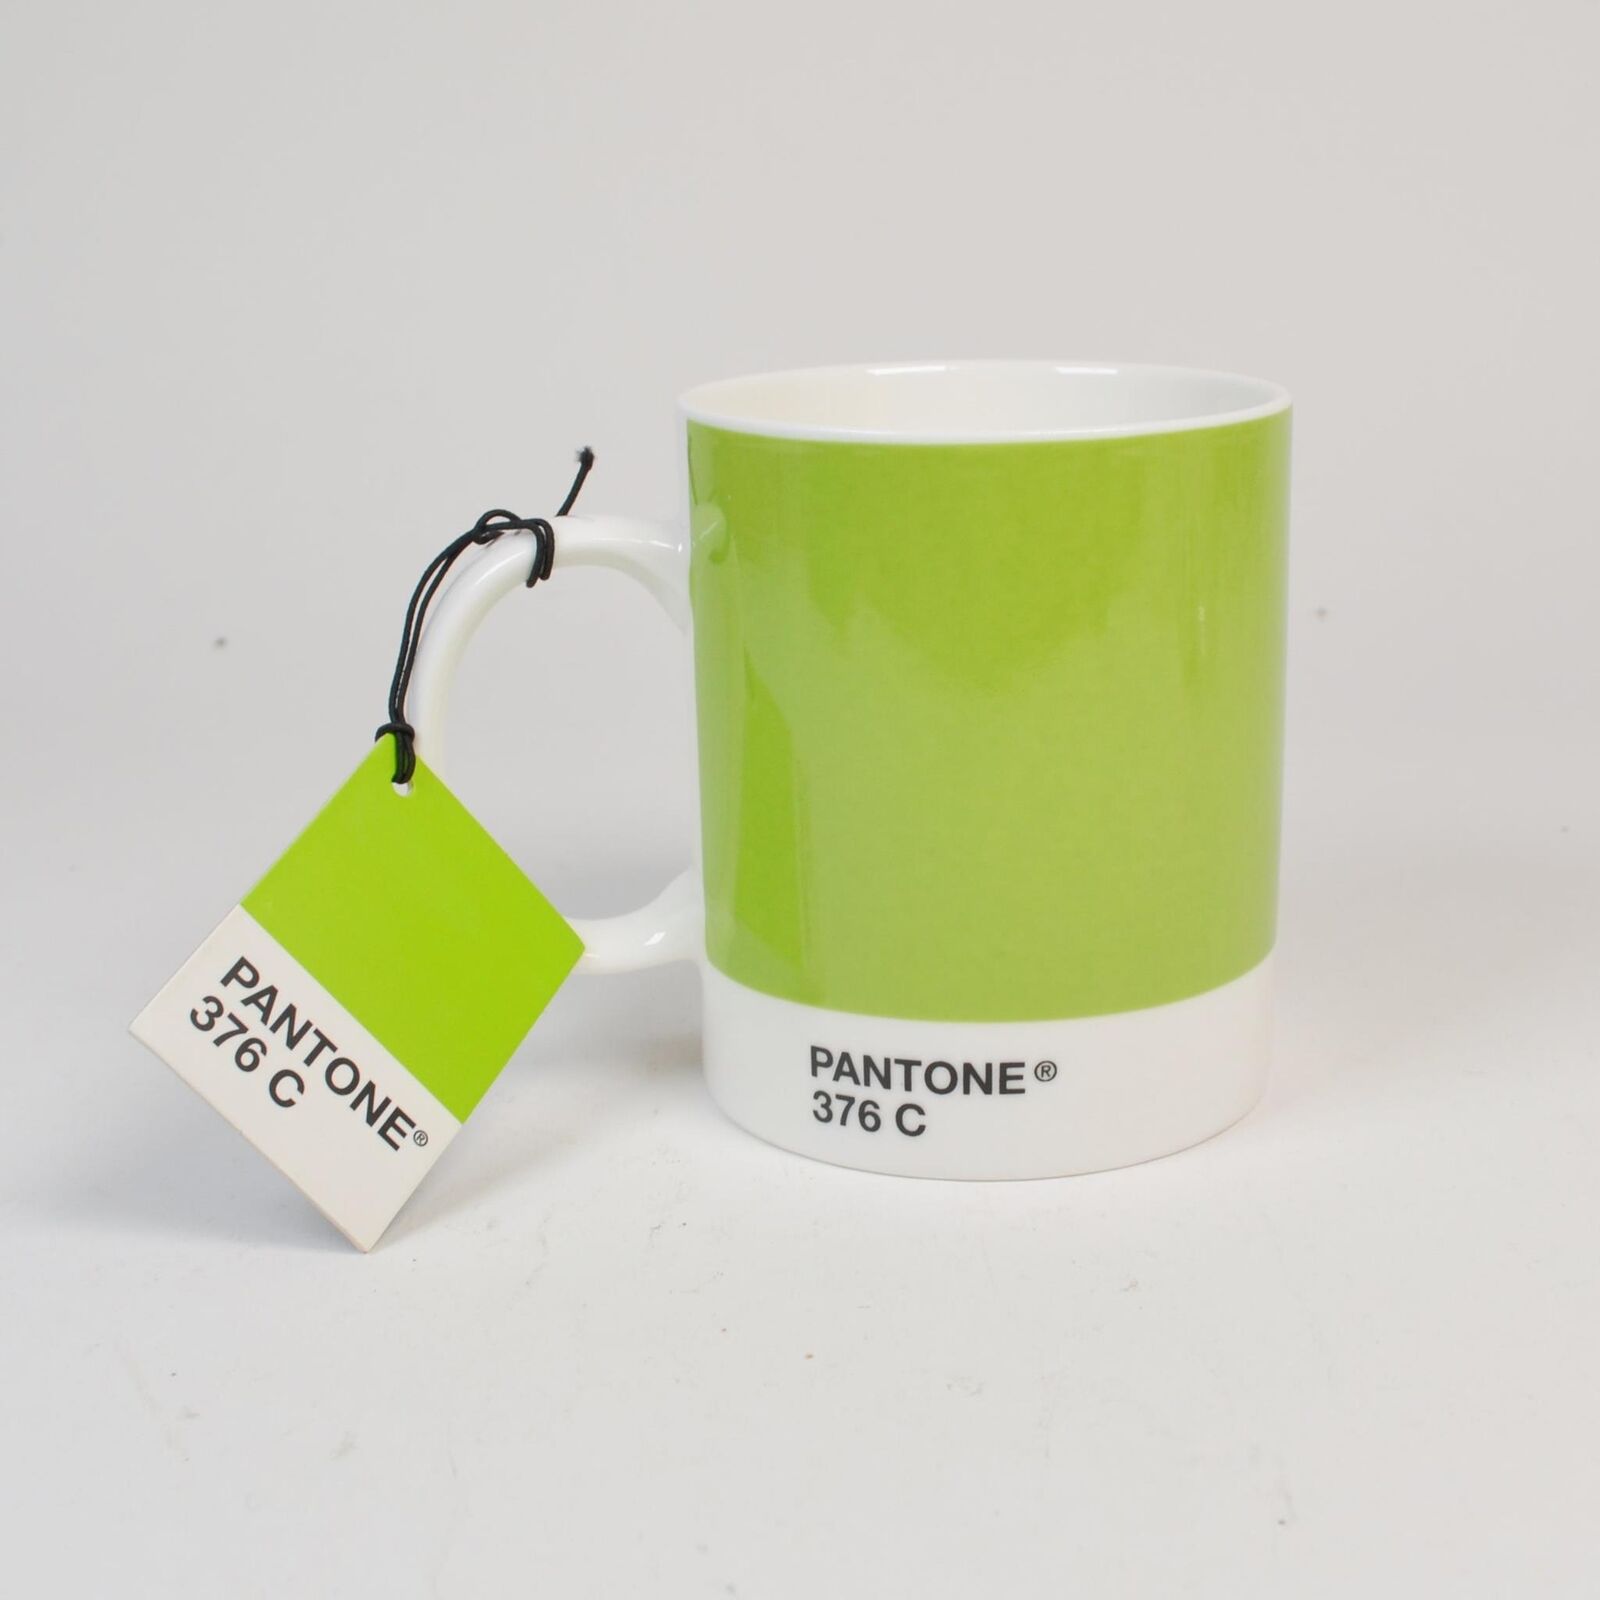 Pantone Coffee Mug - 376 C - Zinger Green - Caterpillar, Green Men - Factory Sec